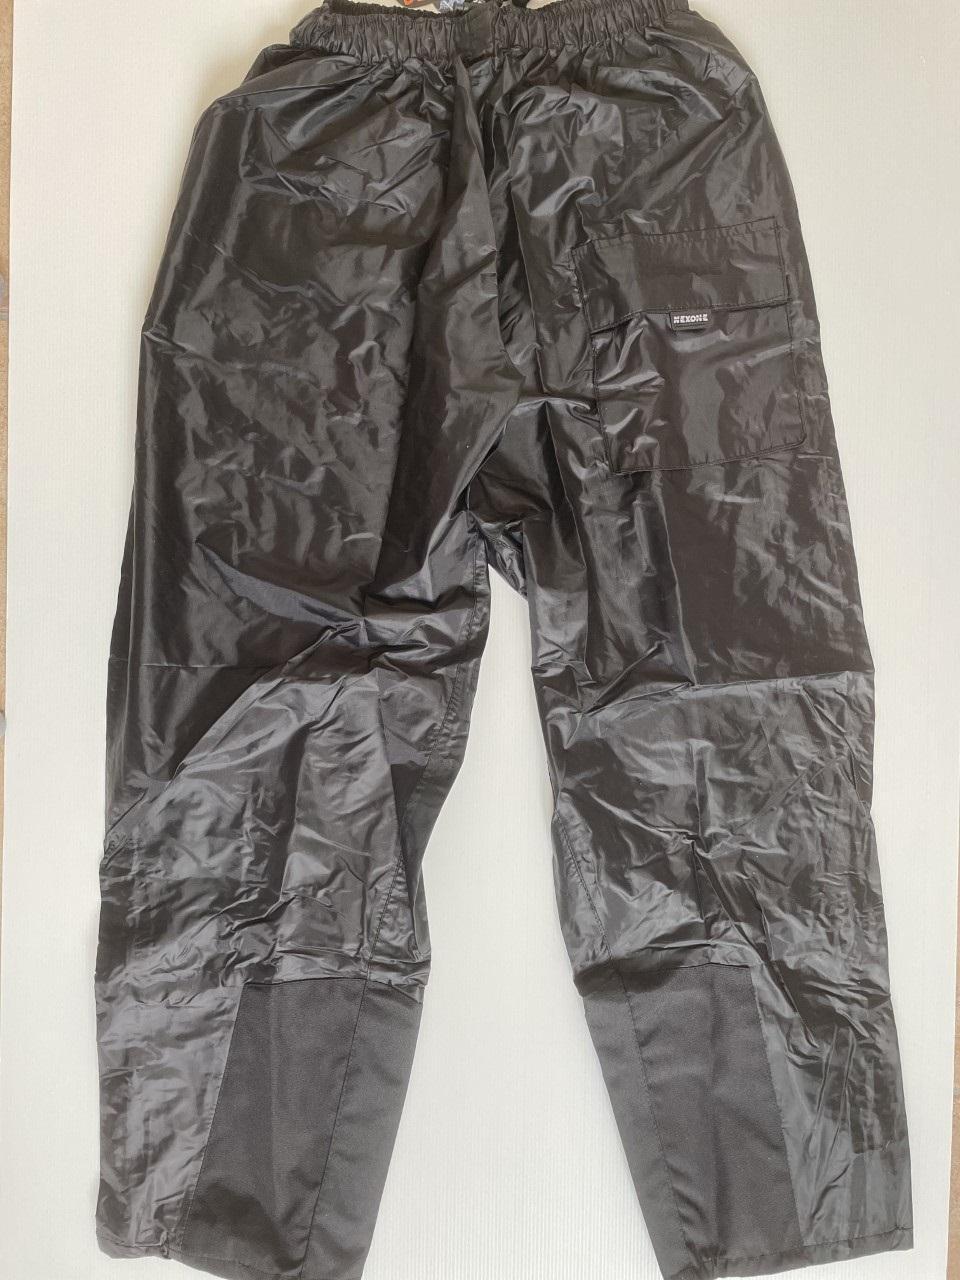 Pantalon de pluie pour moto Homme Femme Nexone PVC Nylon Taille S neuf